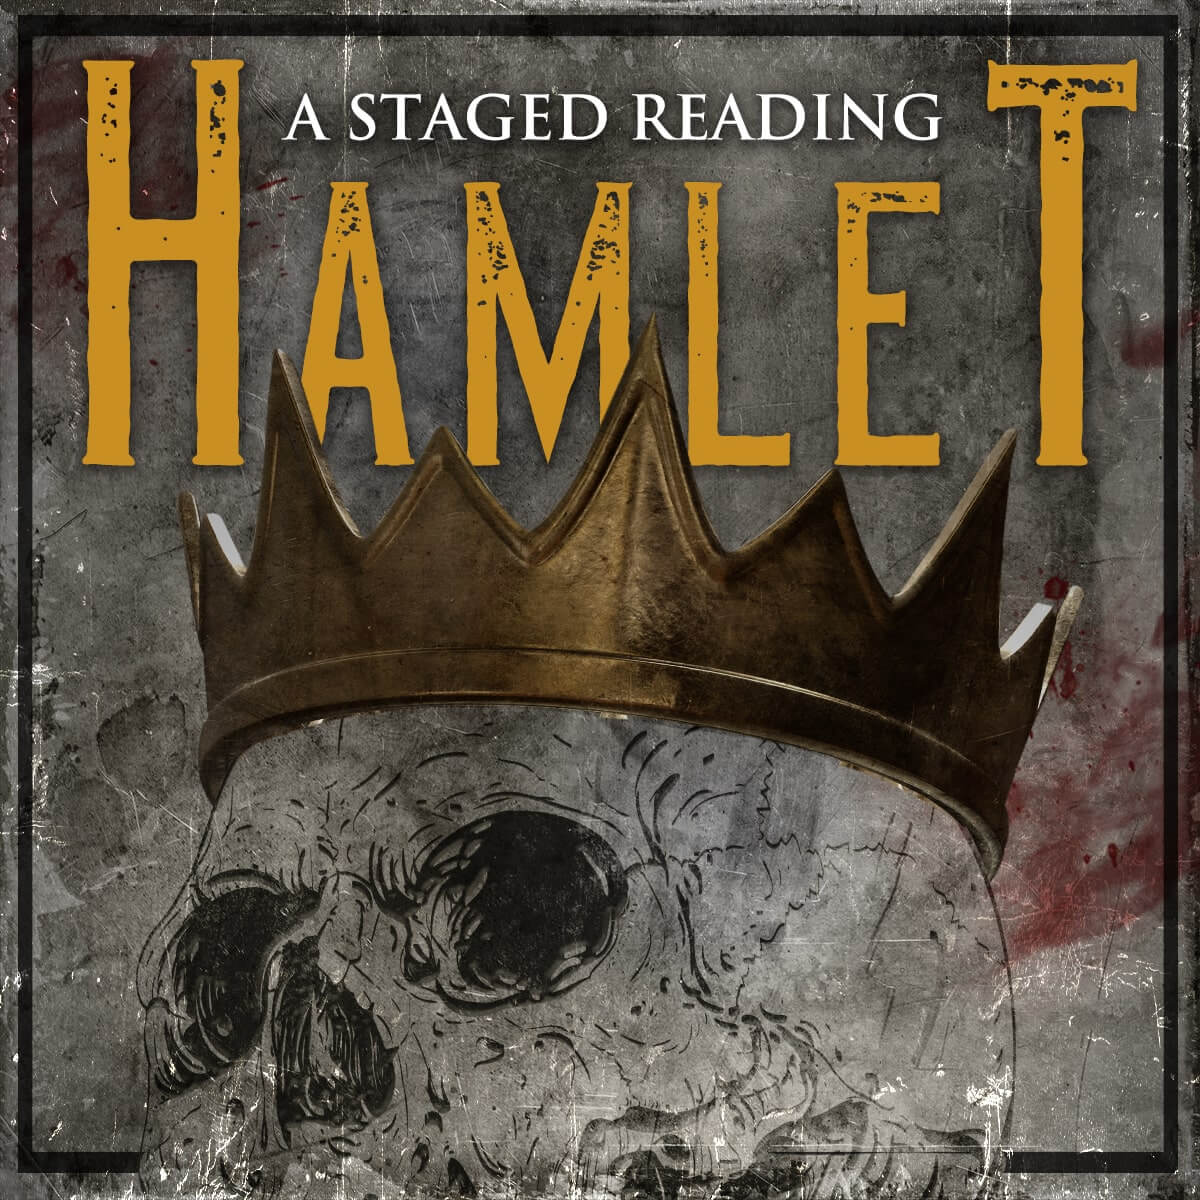 book review hamlet